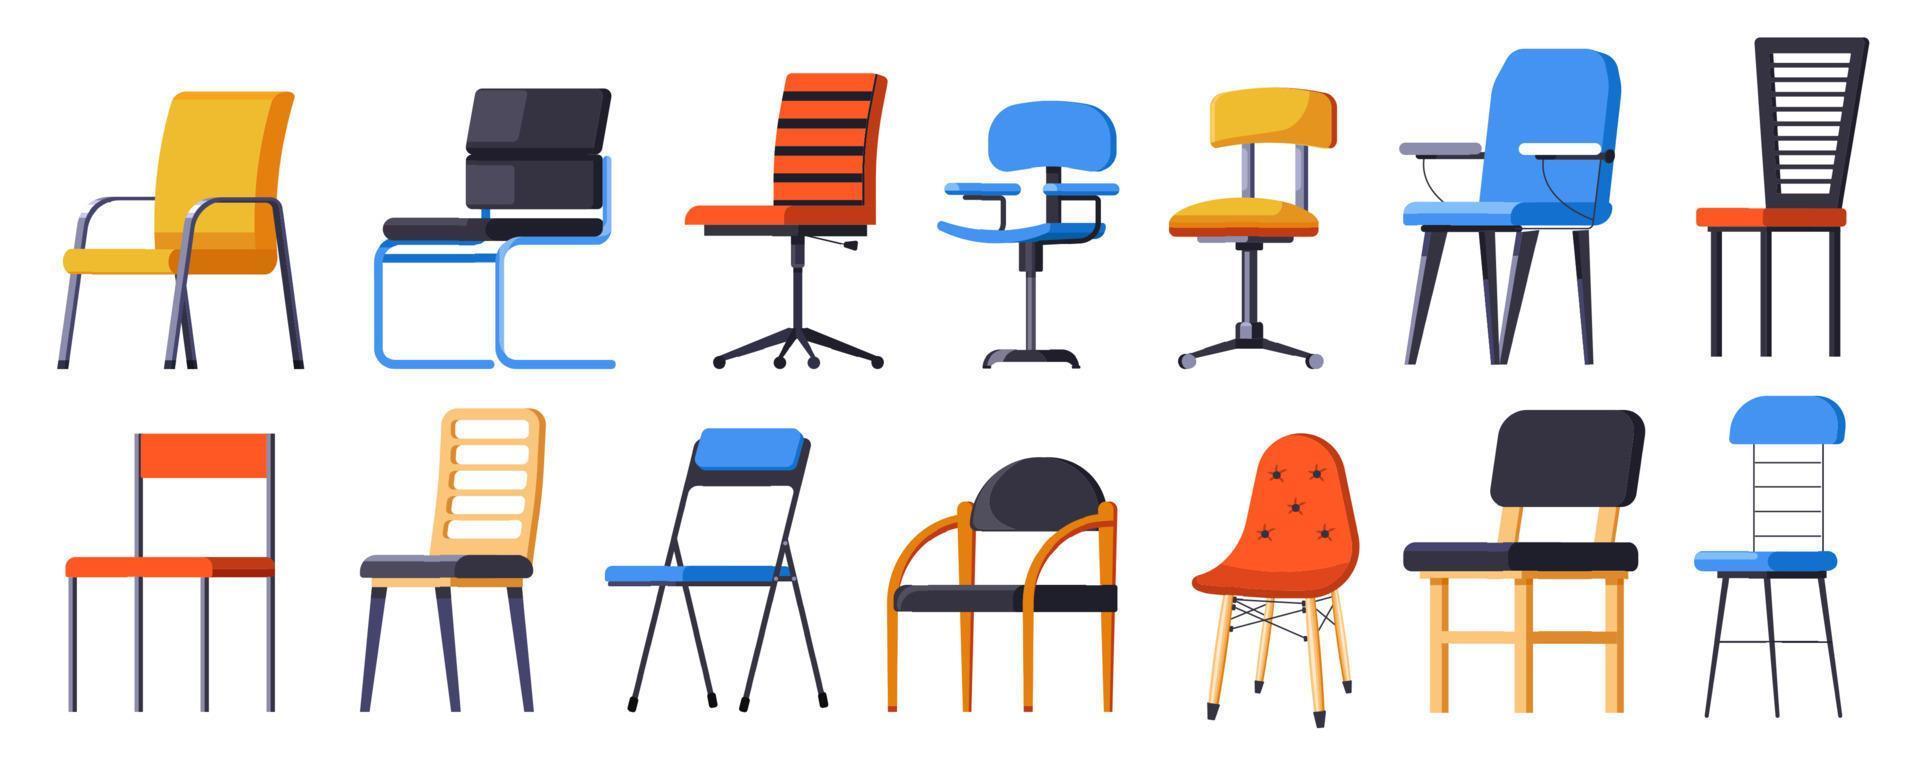 design de cadeiras para estilo de interiores de casa ou escritório vetor